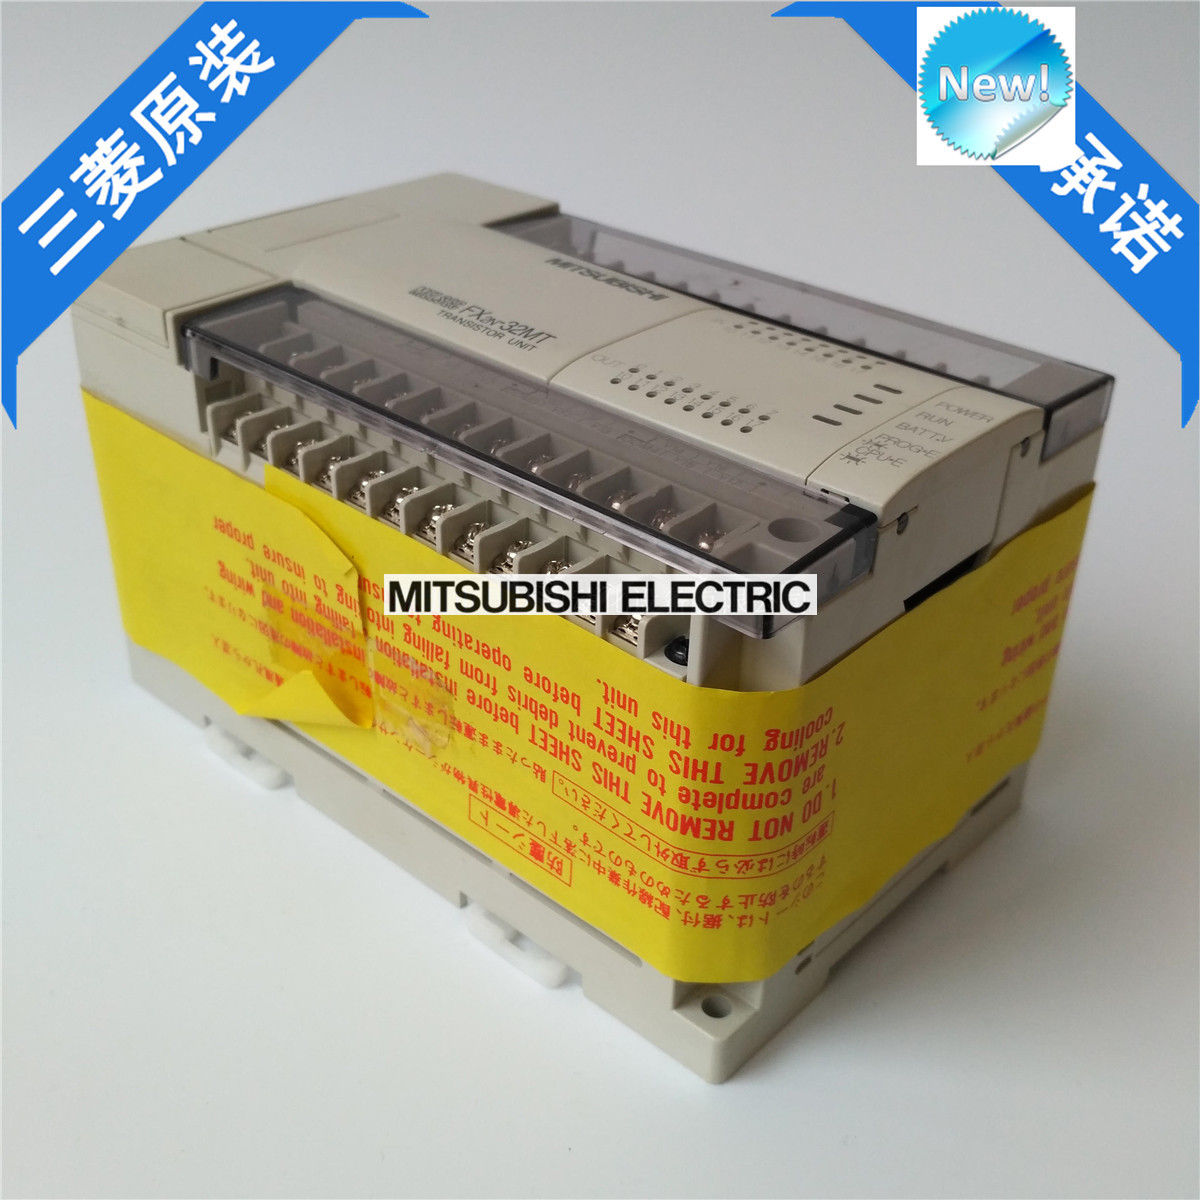 Brand New Mitsubishi PLC FX2N-32MT-001 In Box FX2N32MT001 - Click Image to Close